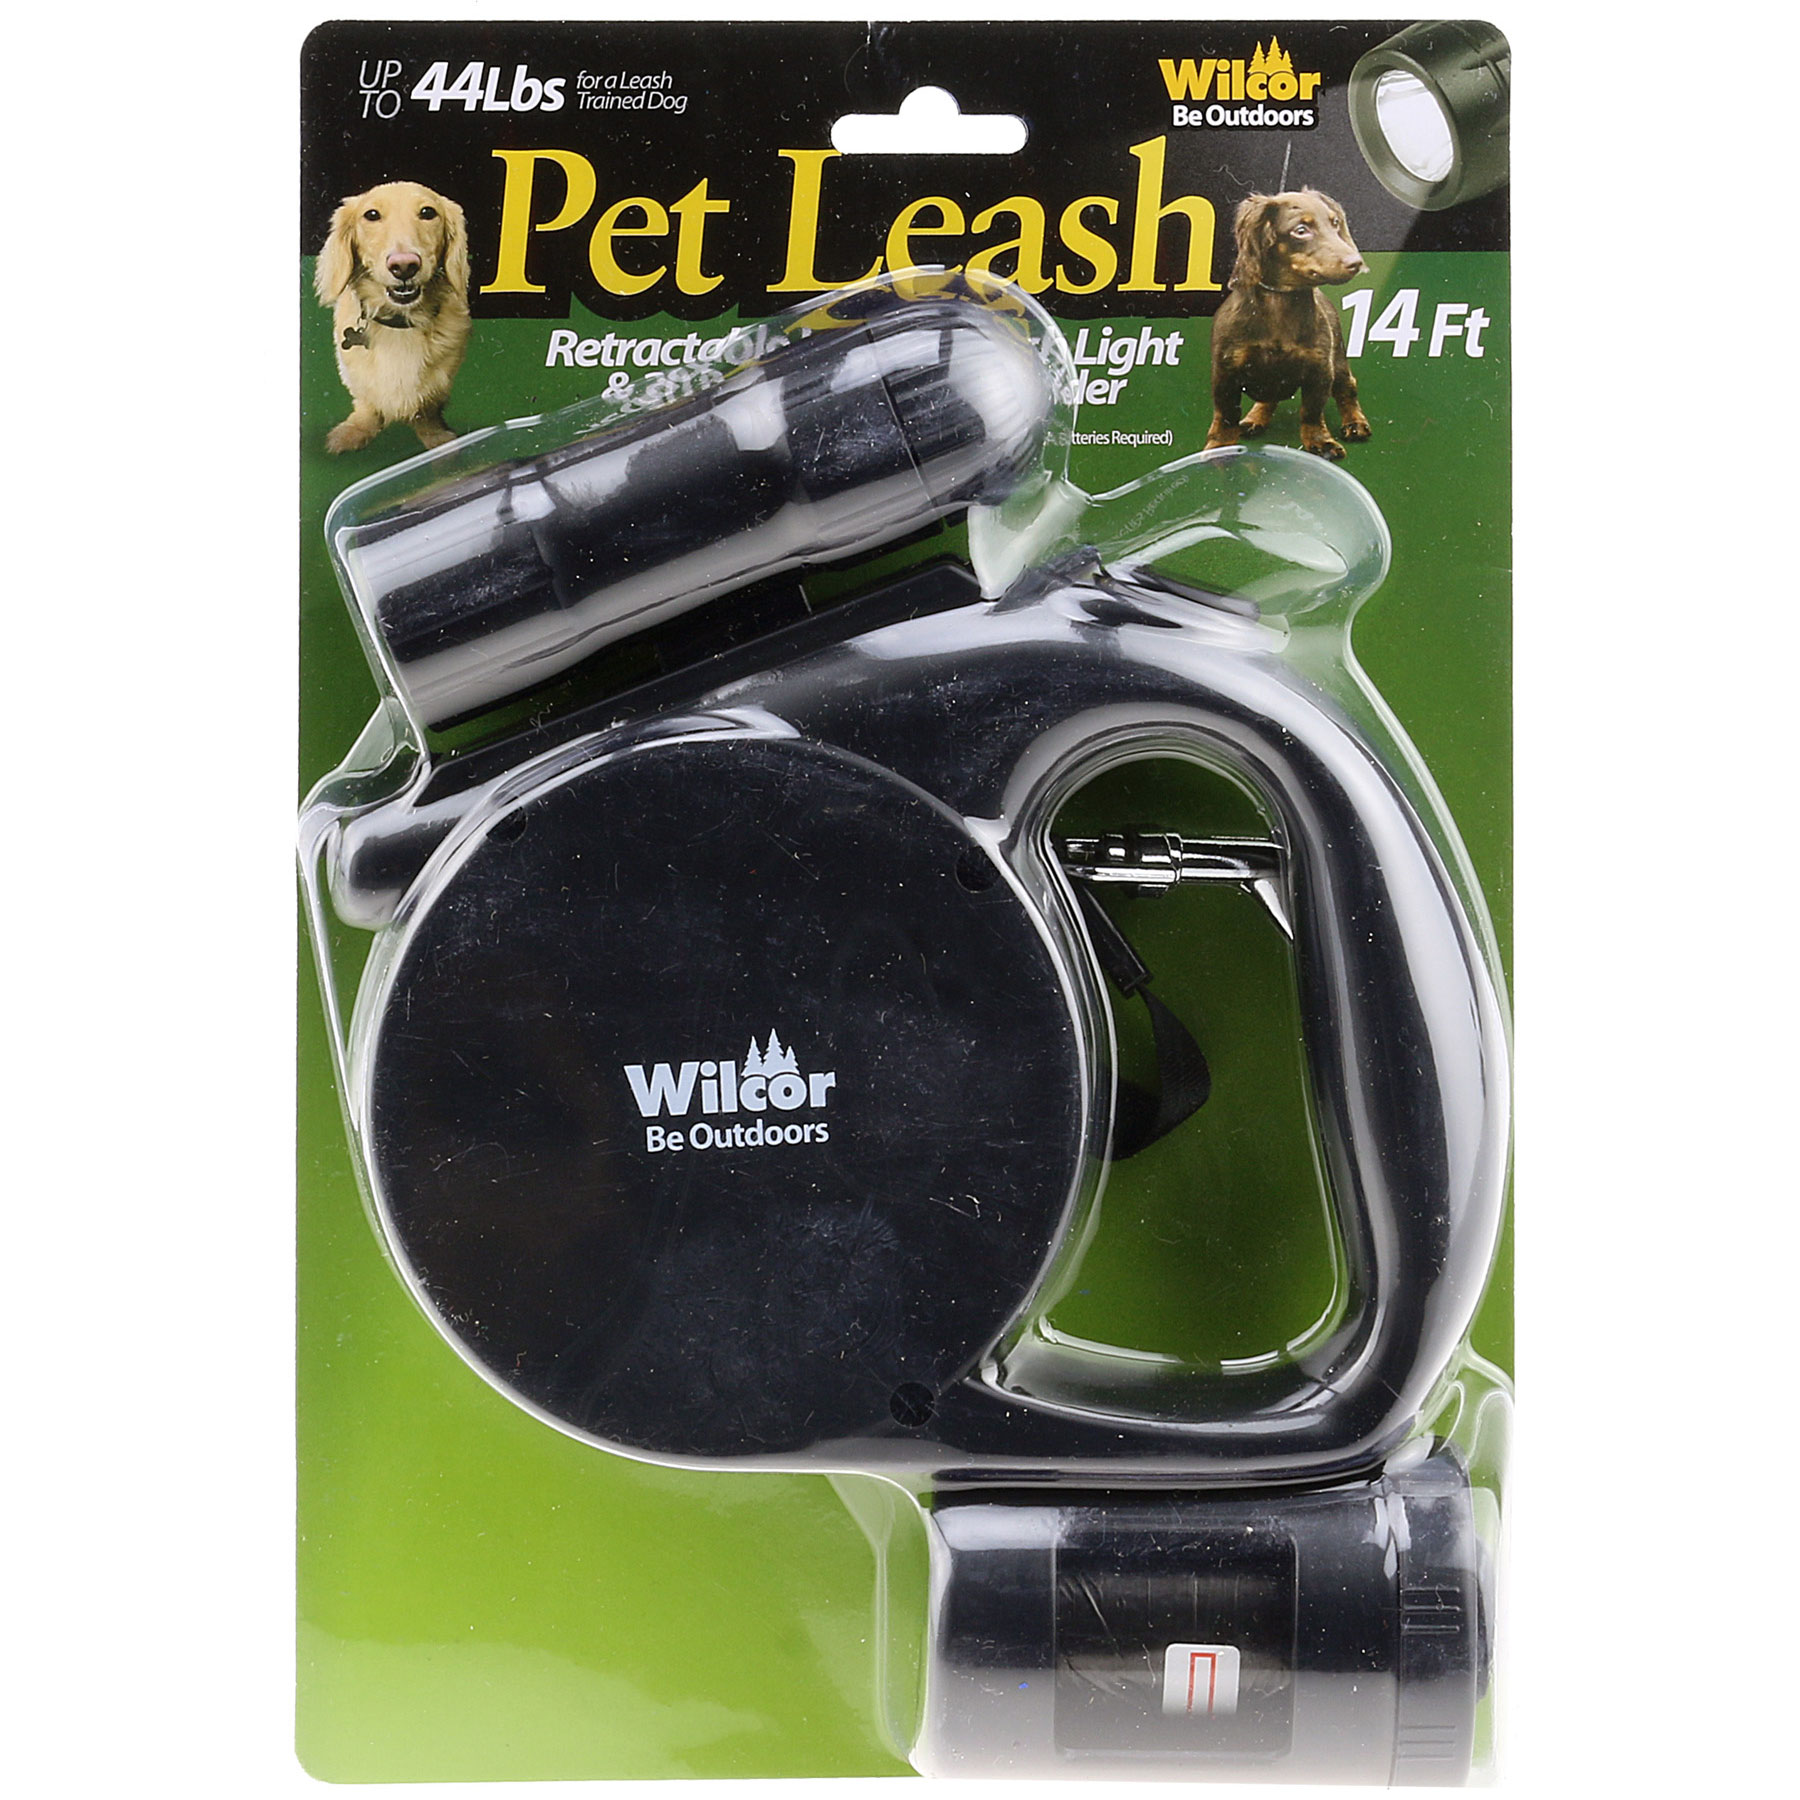 Signature Dog Leash - S7105 – The Walsh Company, Inc.